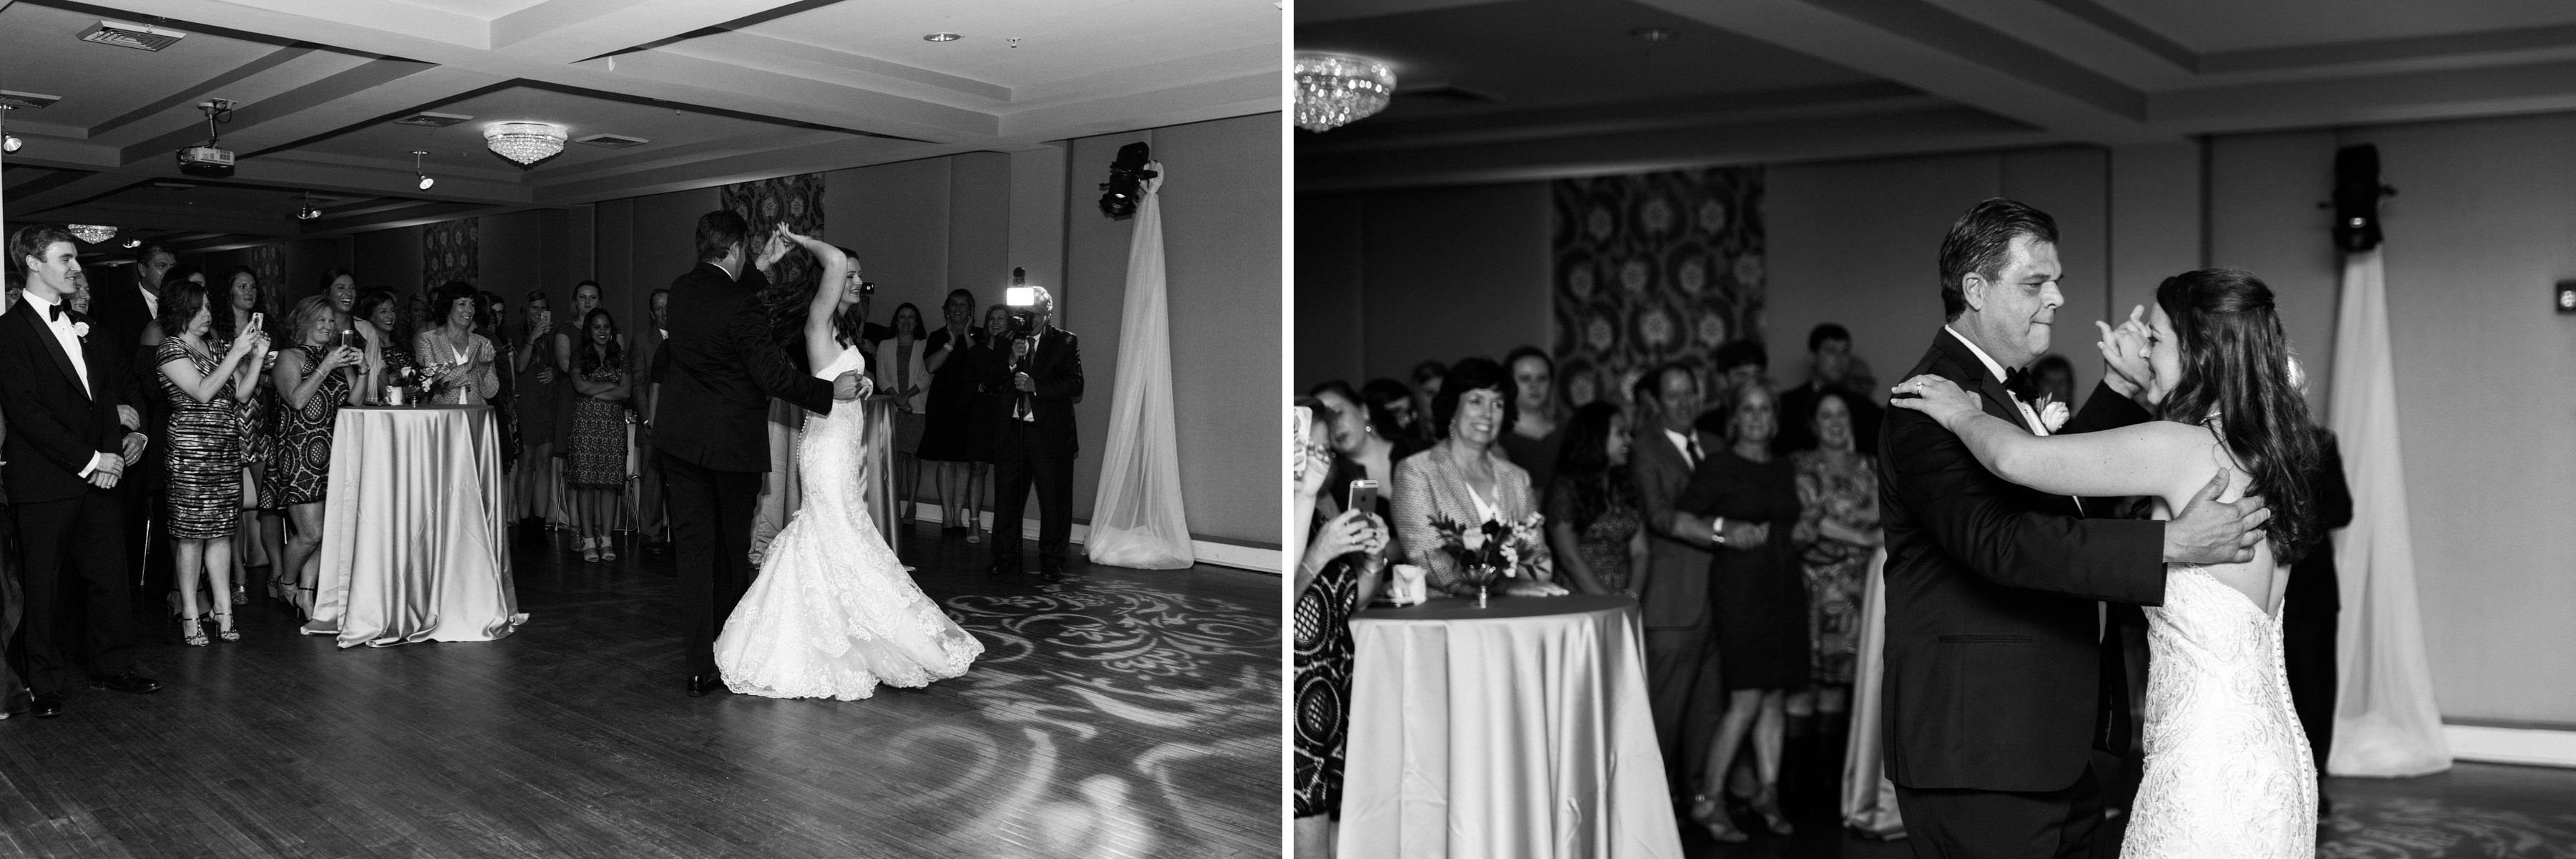 BRYAN_WEDDING_MONTGOMERY_ALABAMA_WEDDING_PHOTOGRAPHY_62